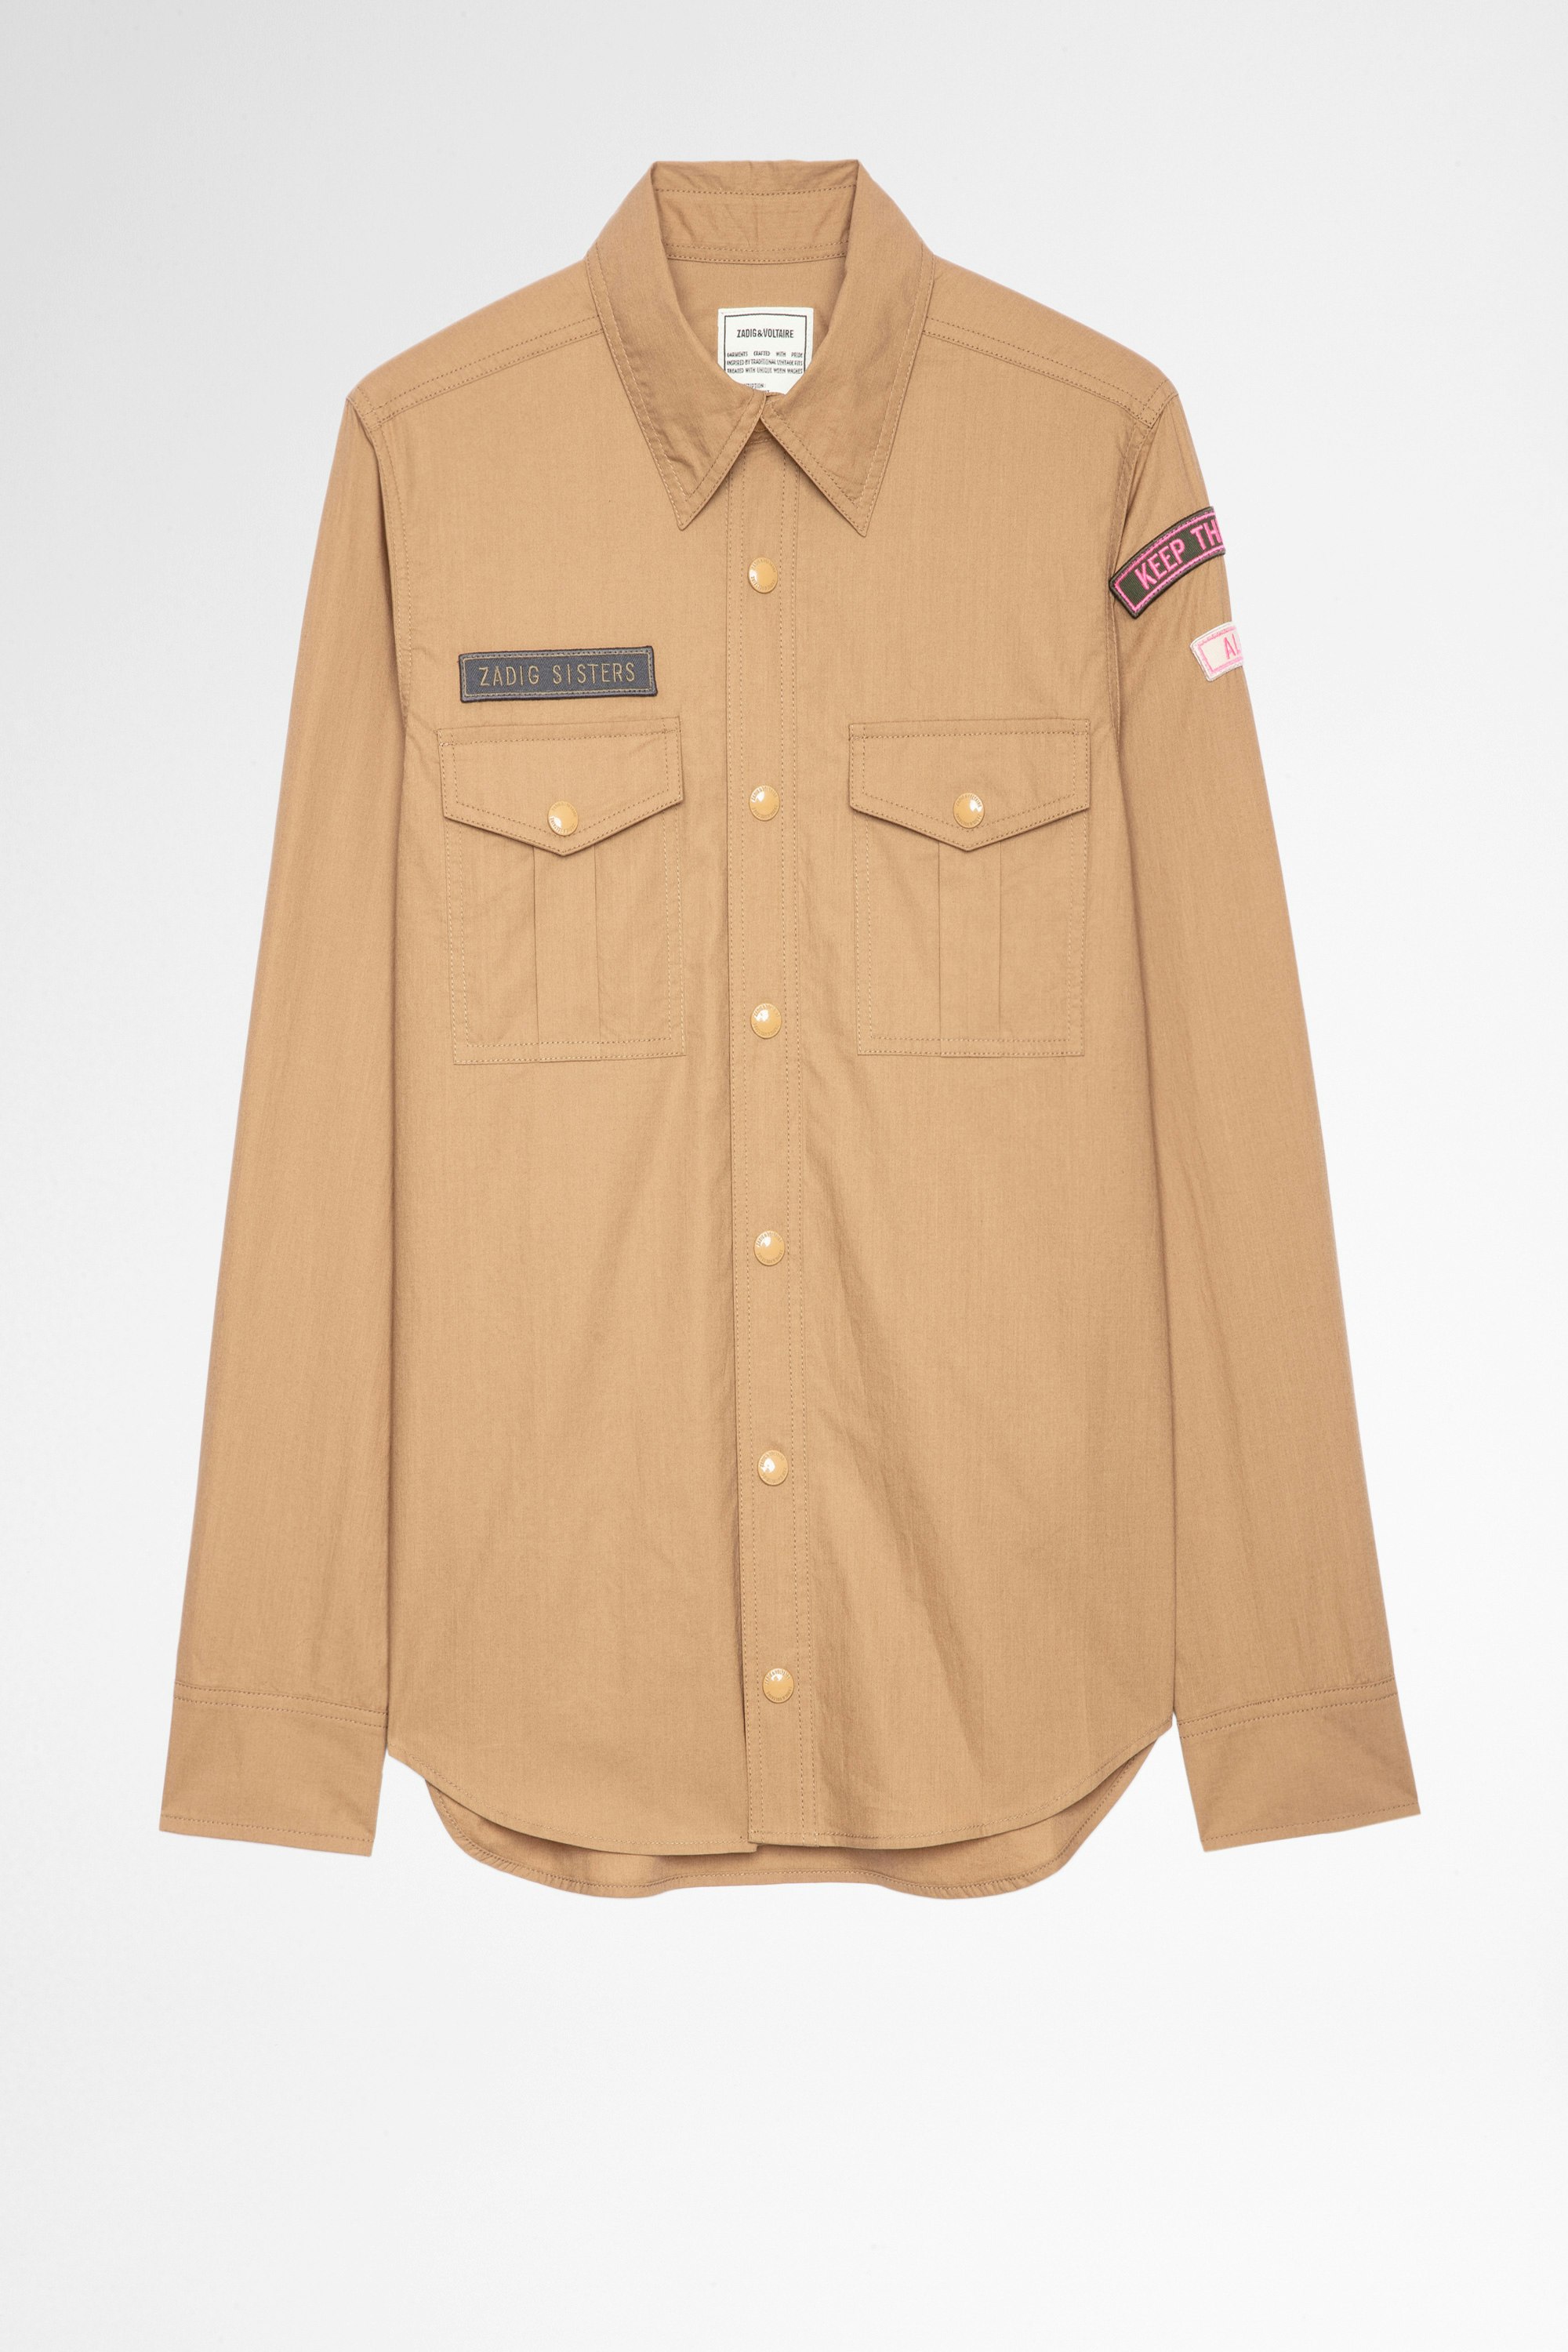 This Shirt Women's camel-coloured cotton military shirt